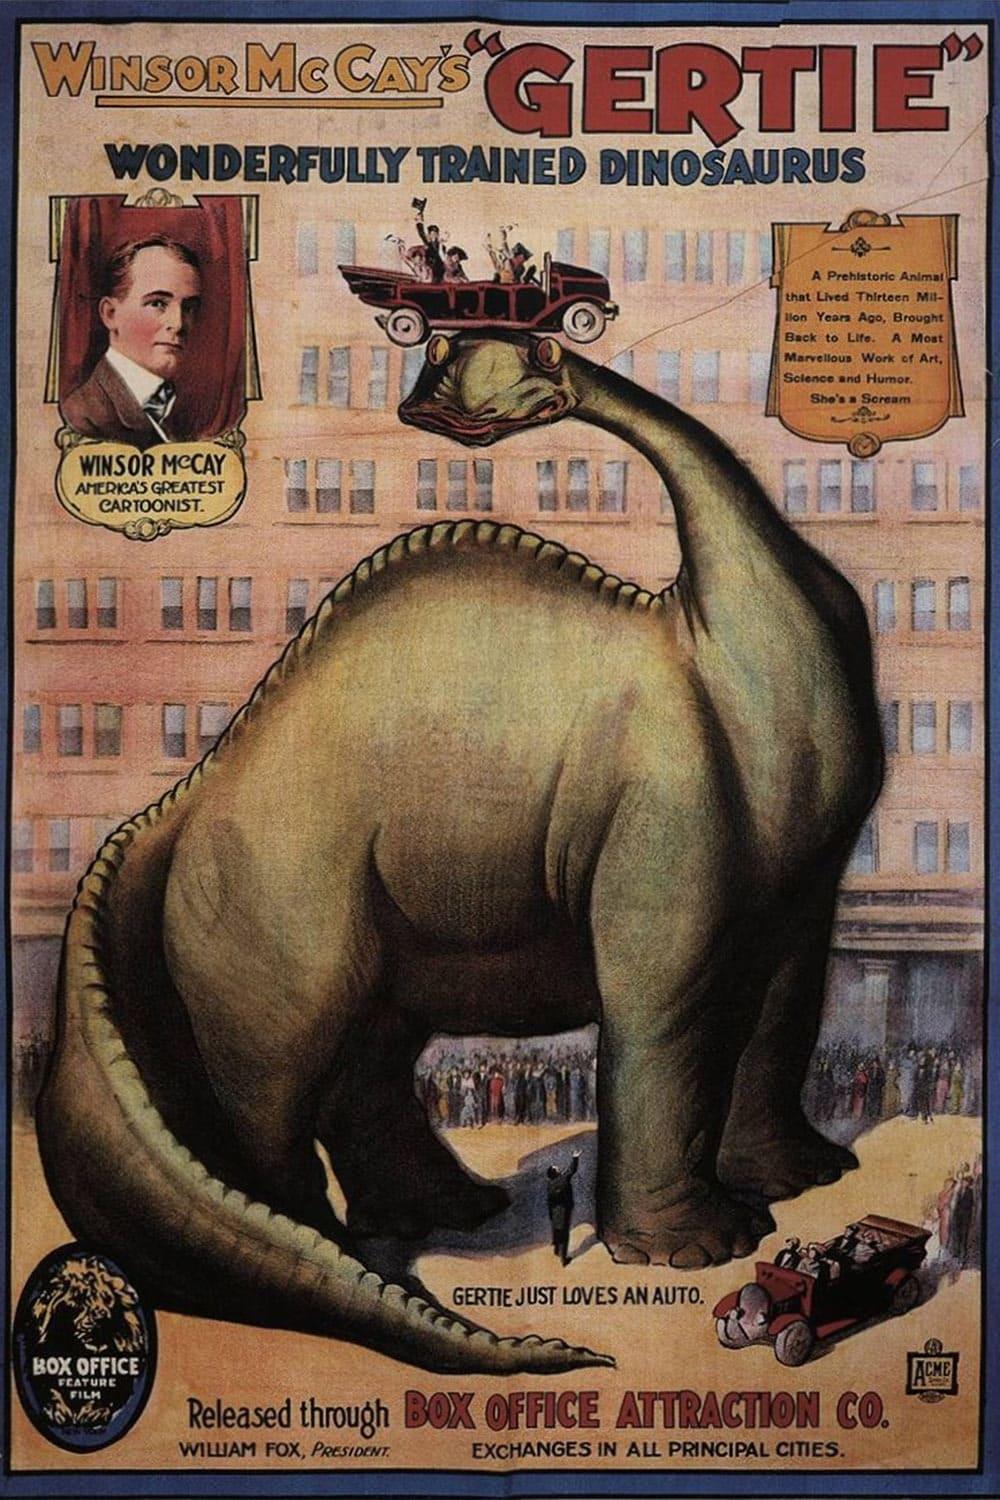 Gertie the Dinosaur poster